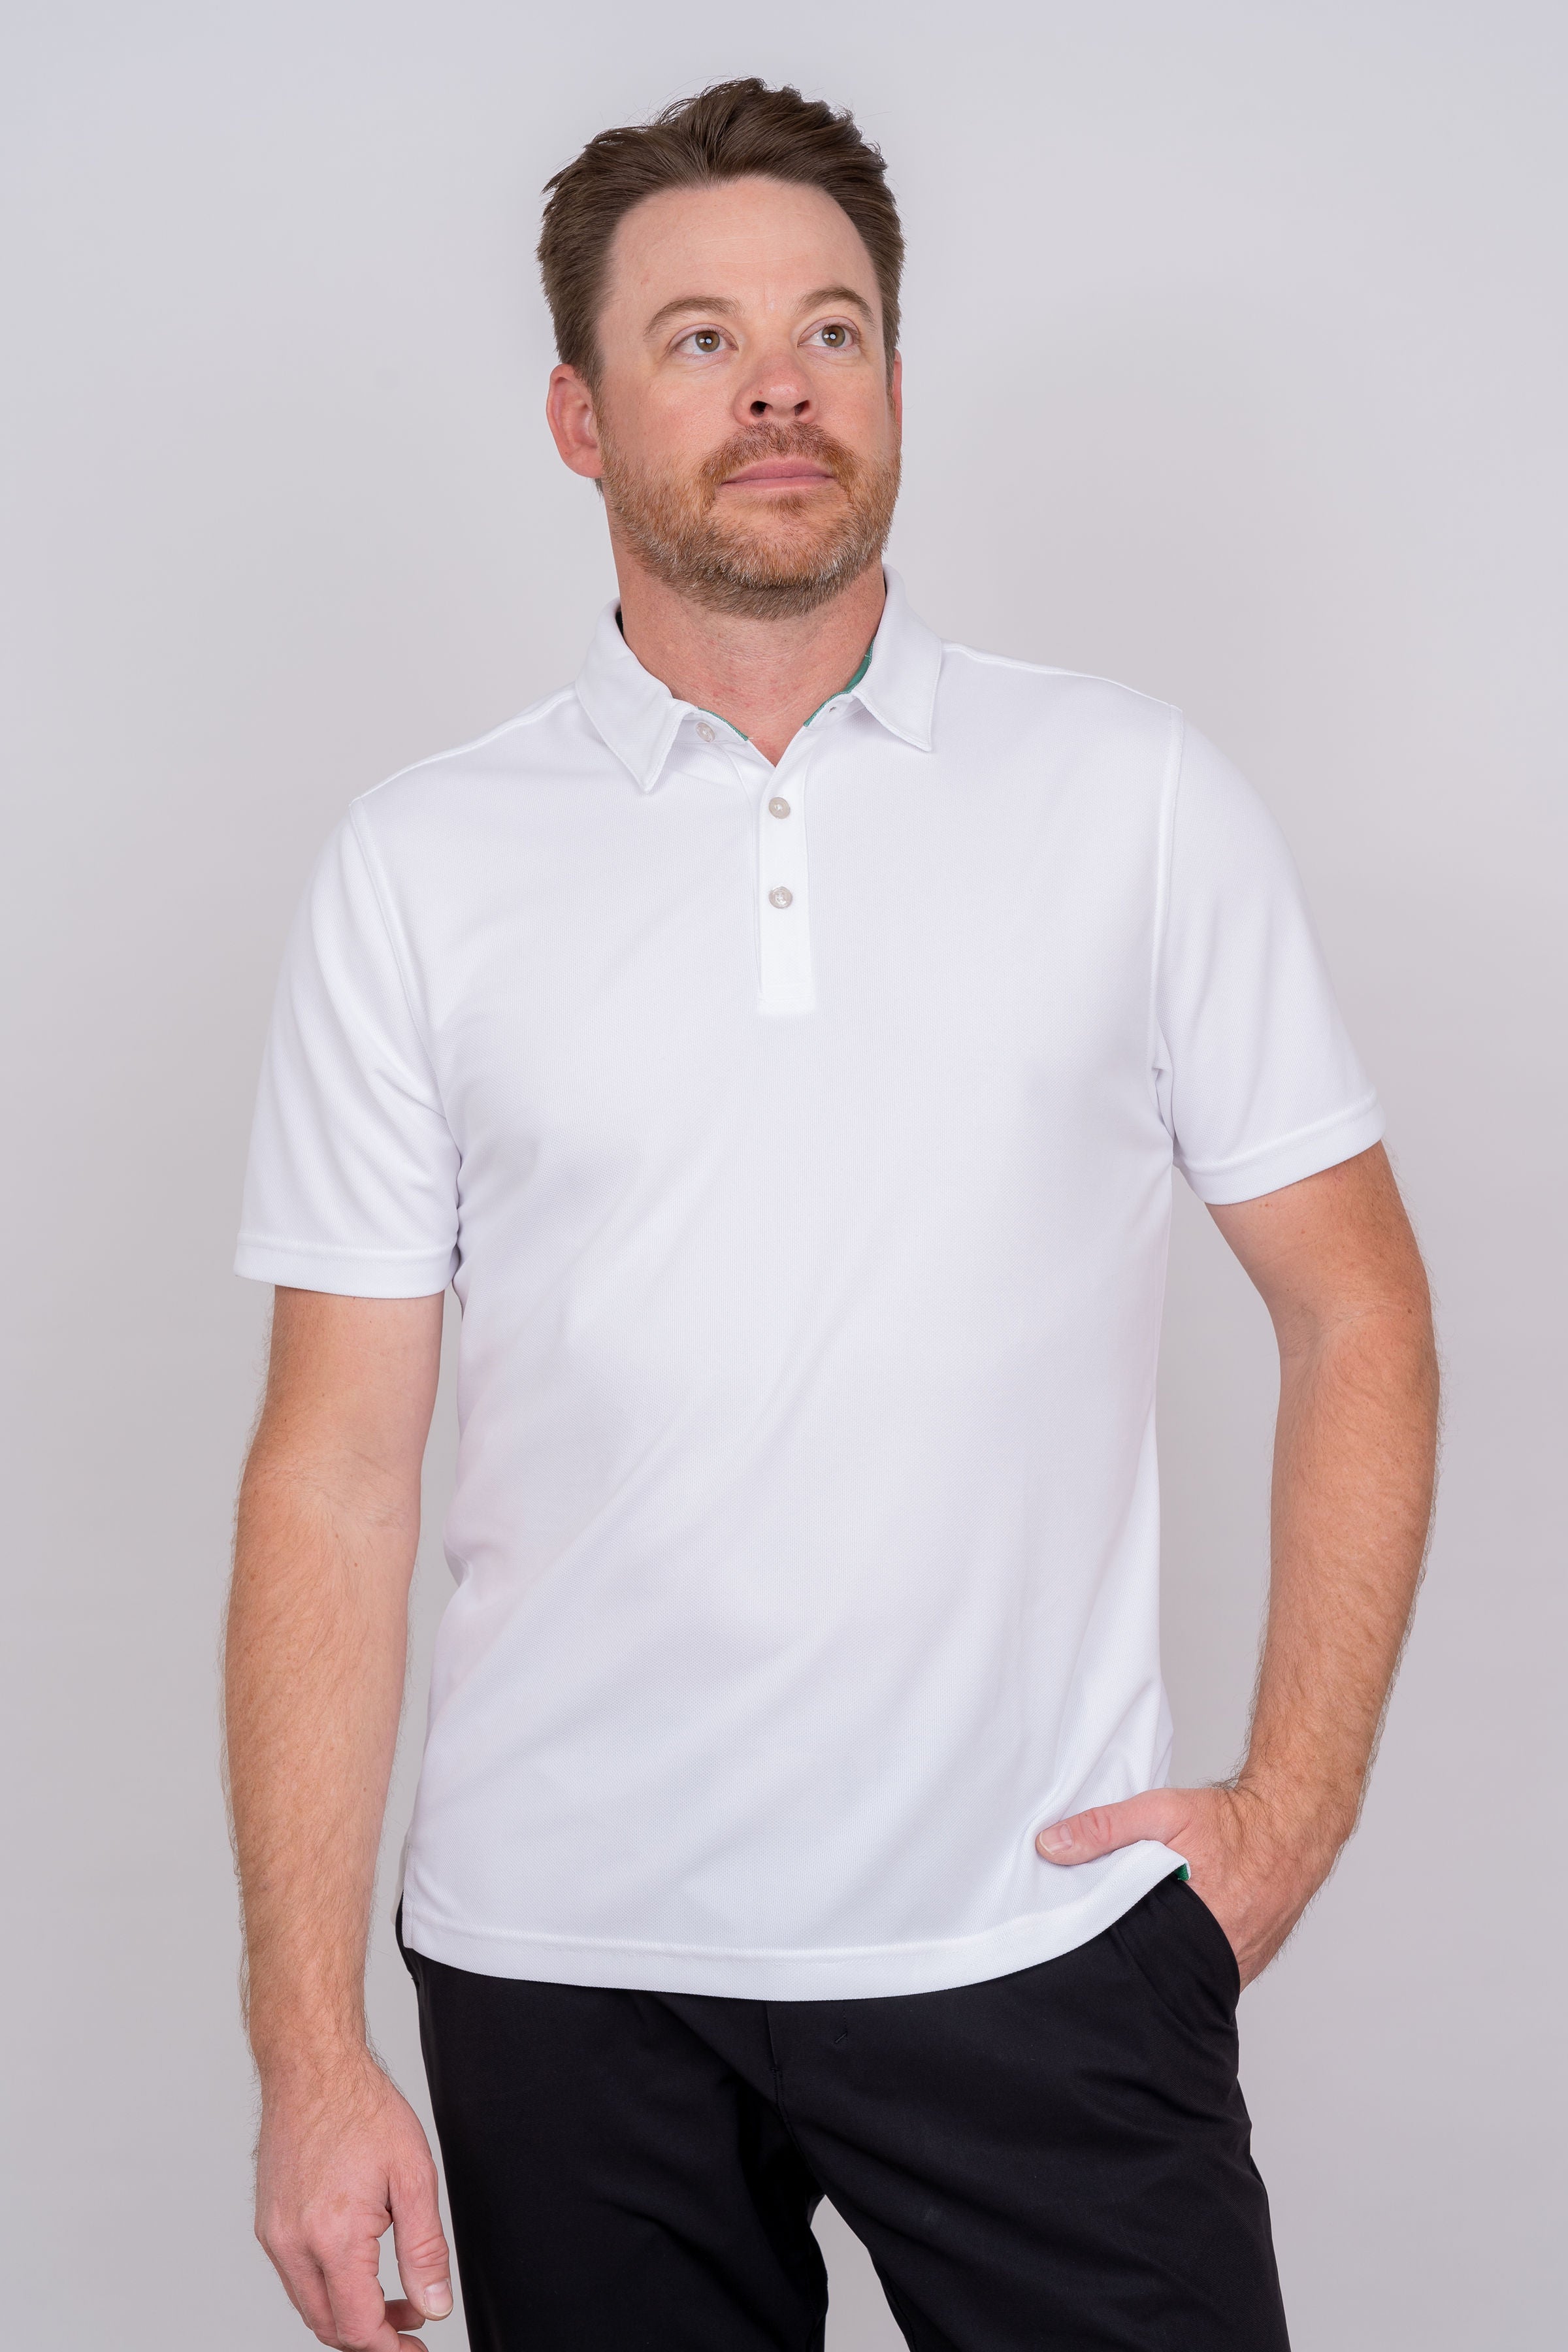 Weekend Polo - Augusta Edition Men's Golf Shirt Taylor Jordan Apparel White Small Masters